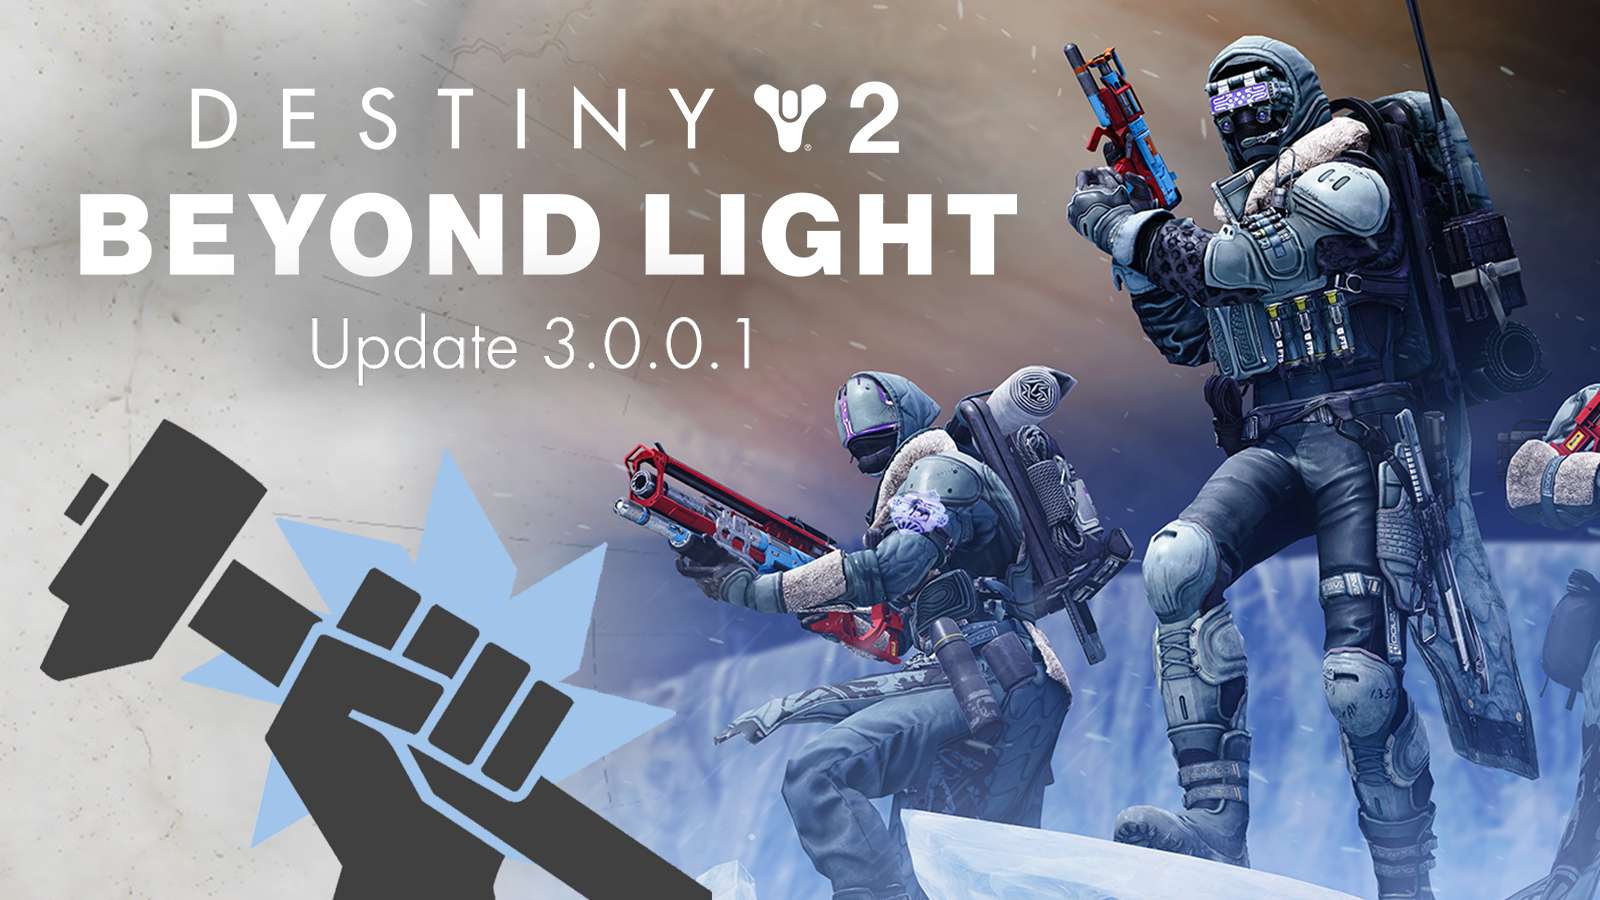 Destiny 2 Beyond Light update 3.0.0.1 patch notes on Guardian image.